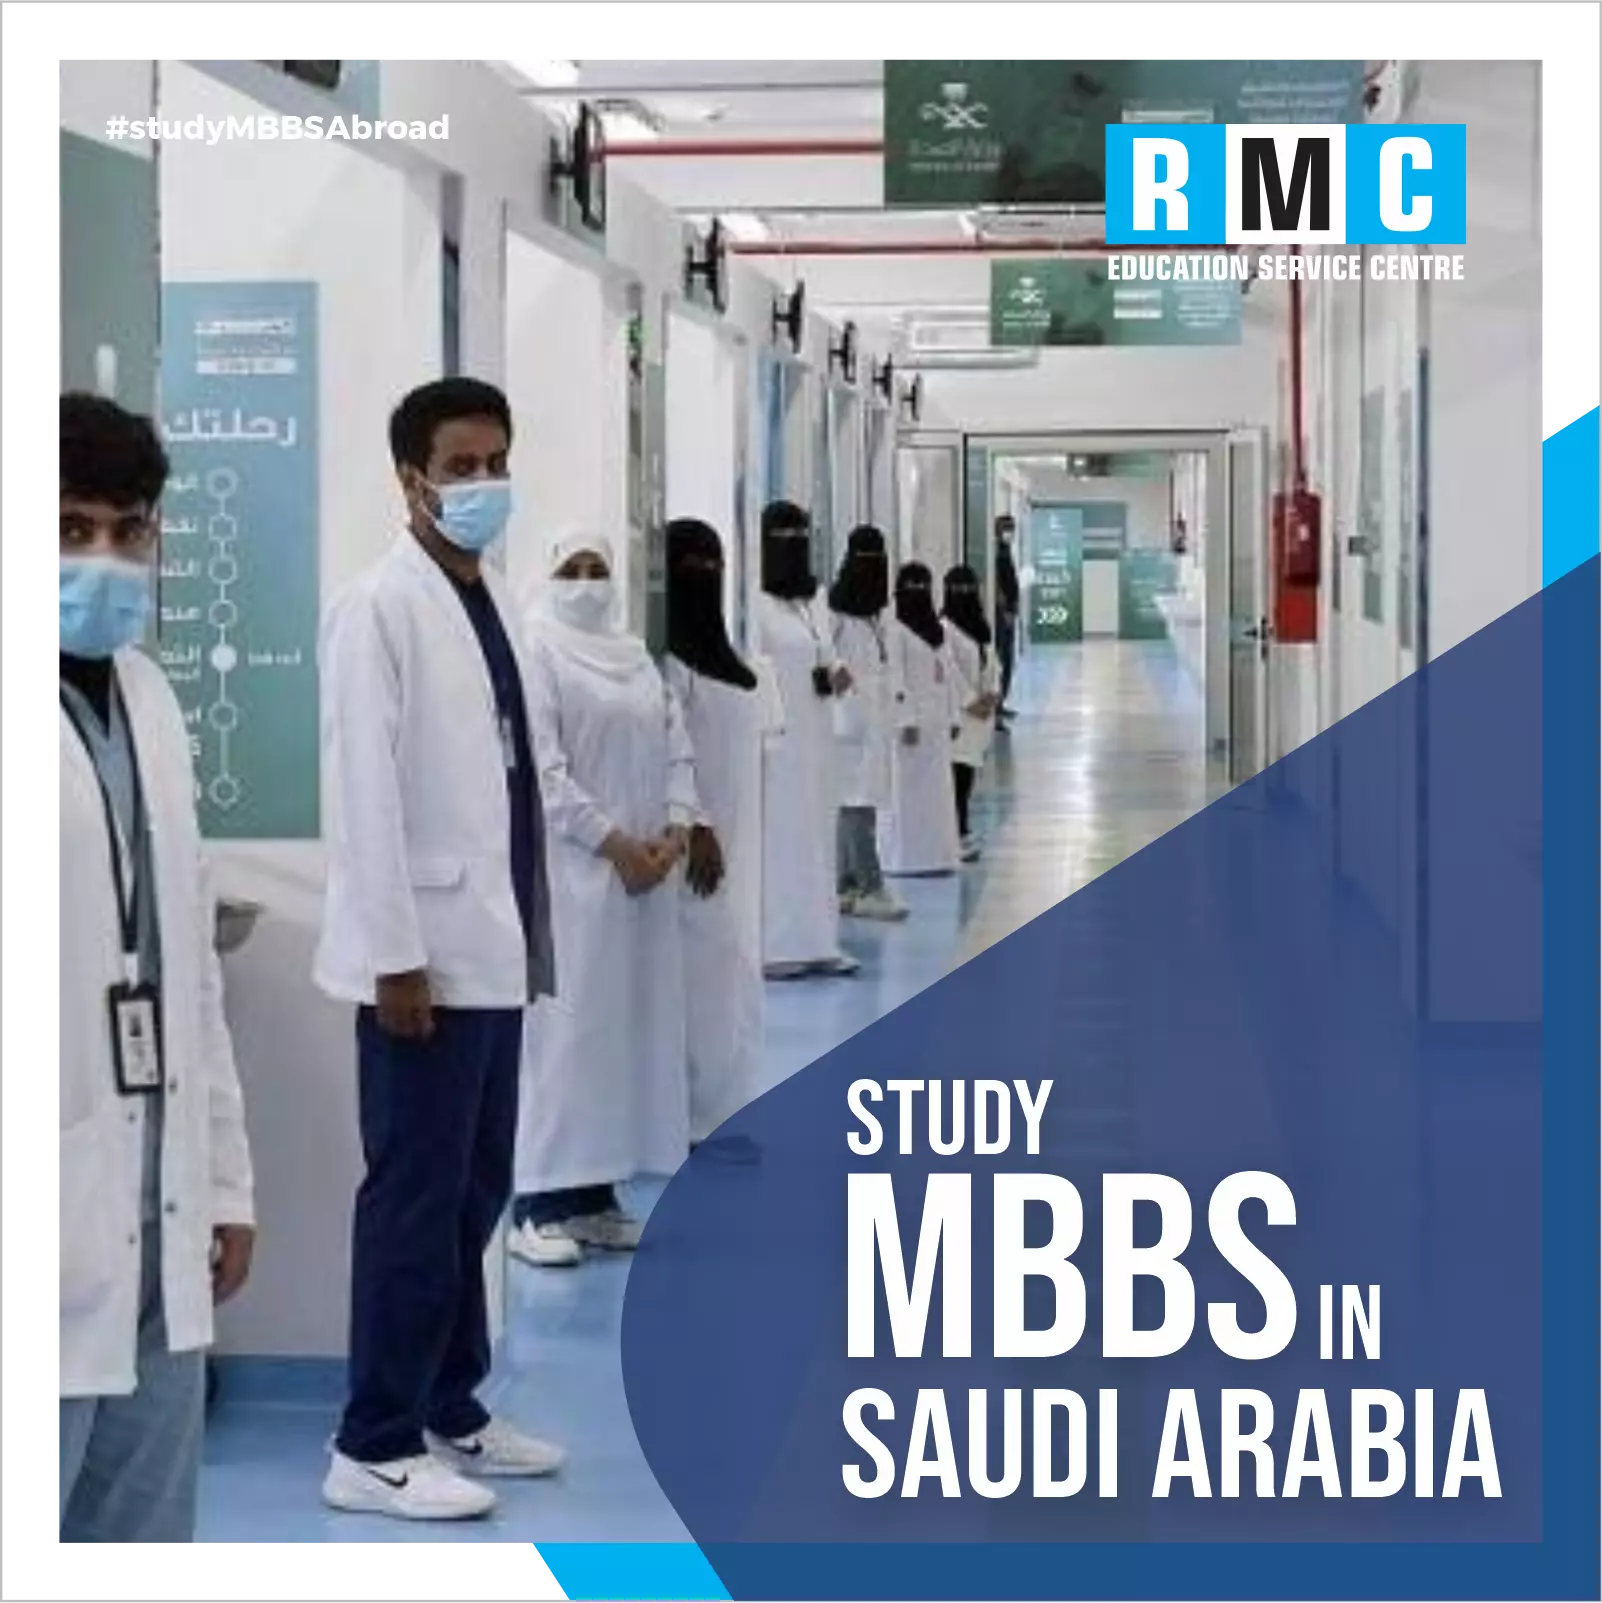 MBBS in Saudi Arabia